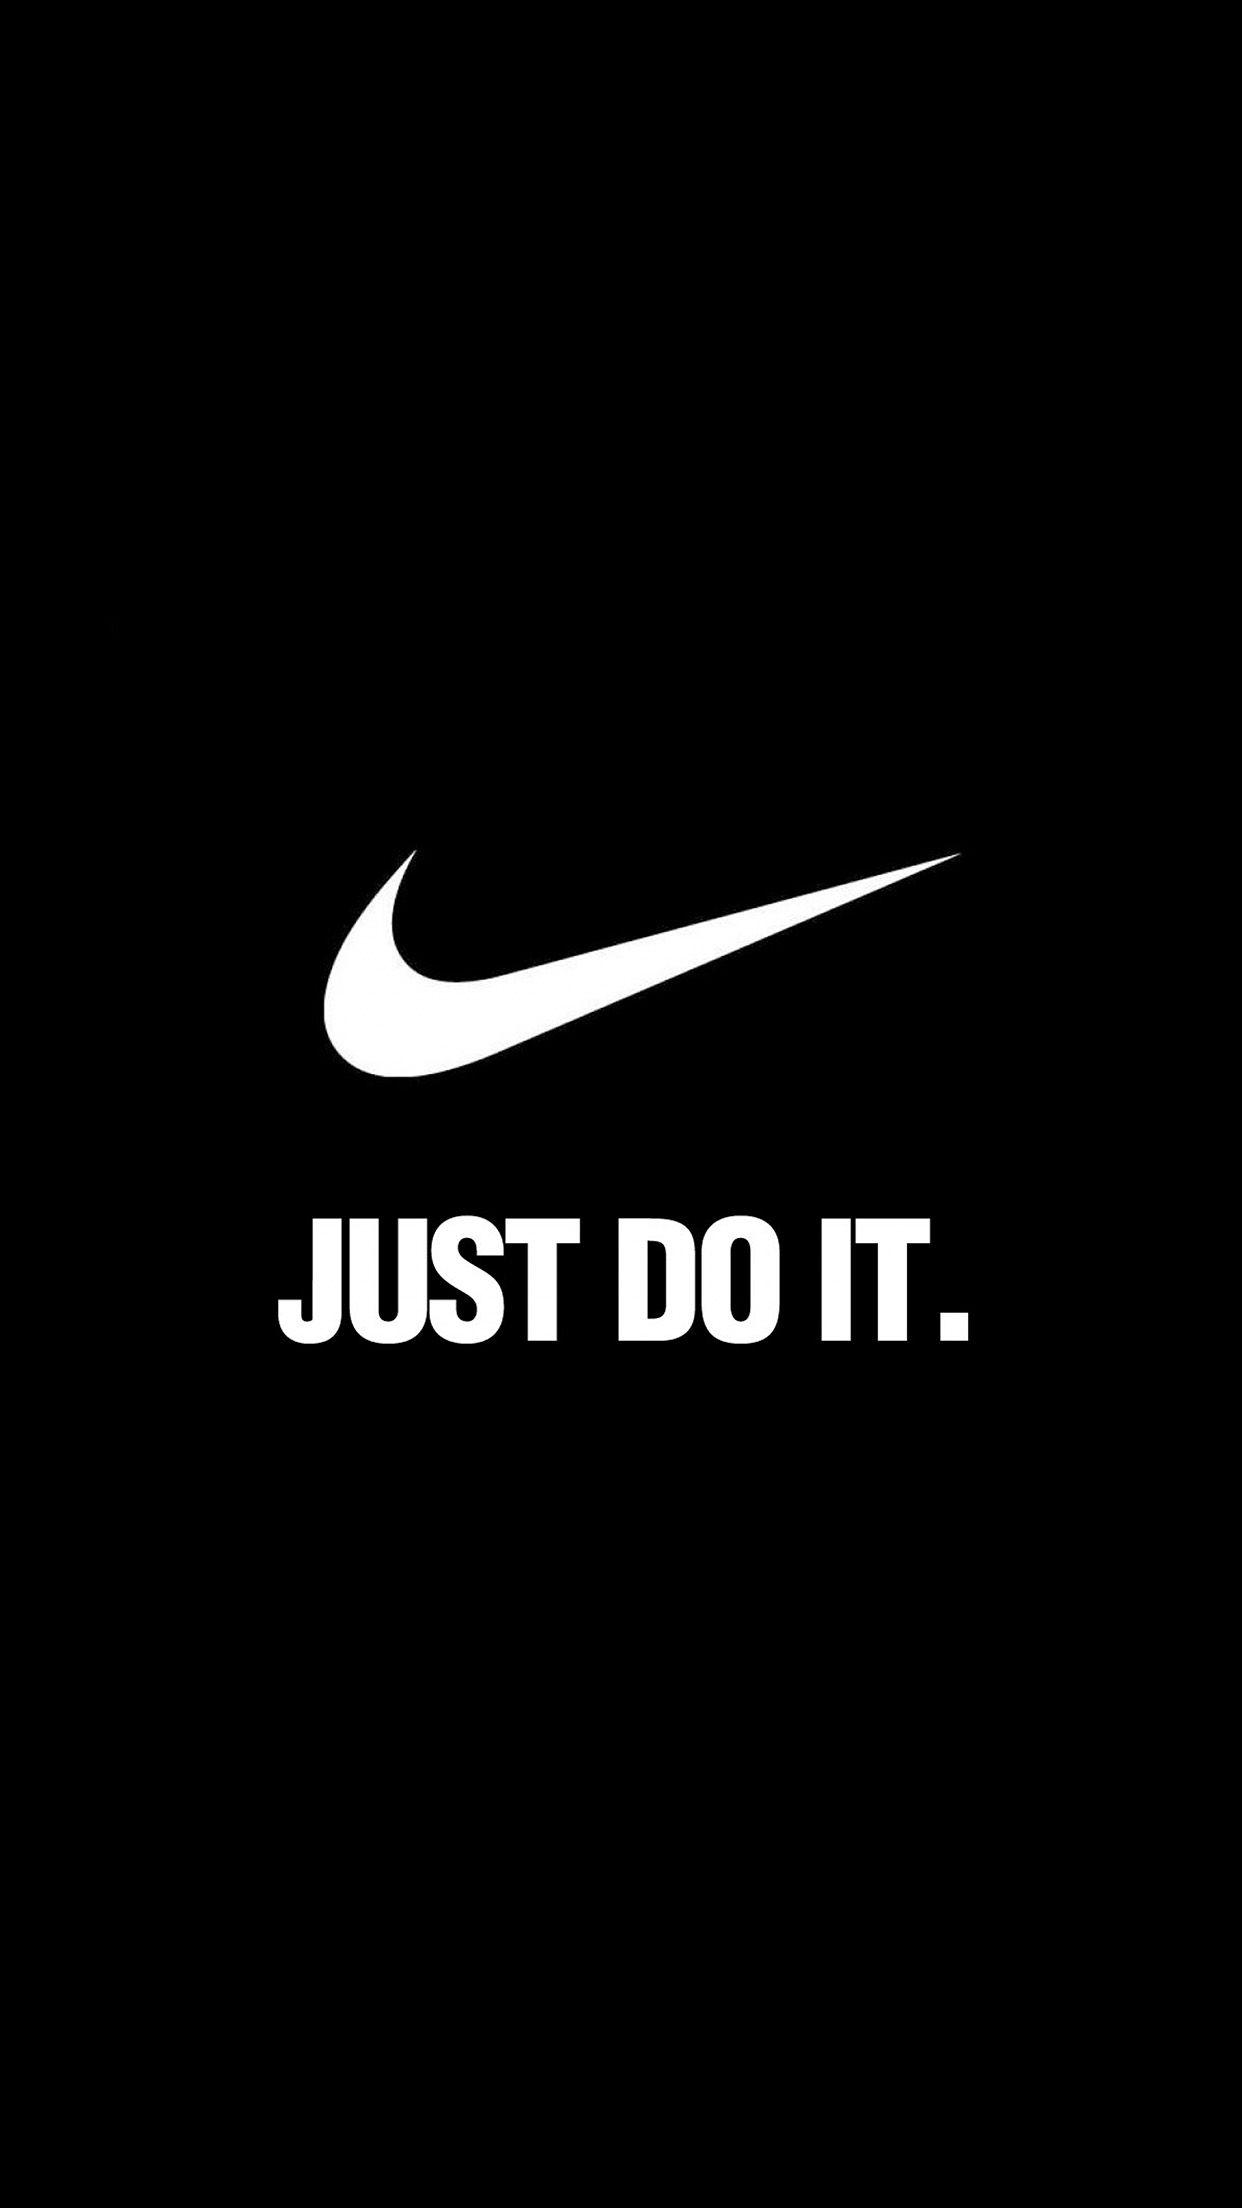 Nike Just Do It Wallpaper 1080p On Wallpaper 1080p HD